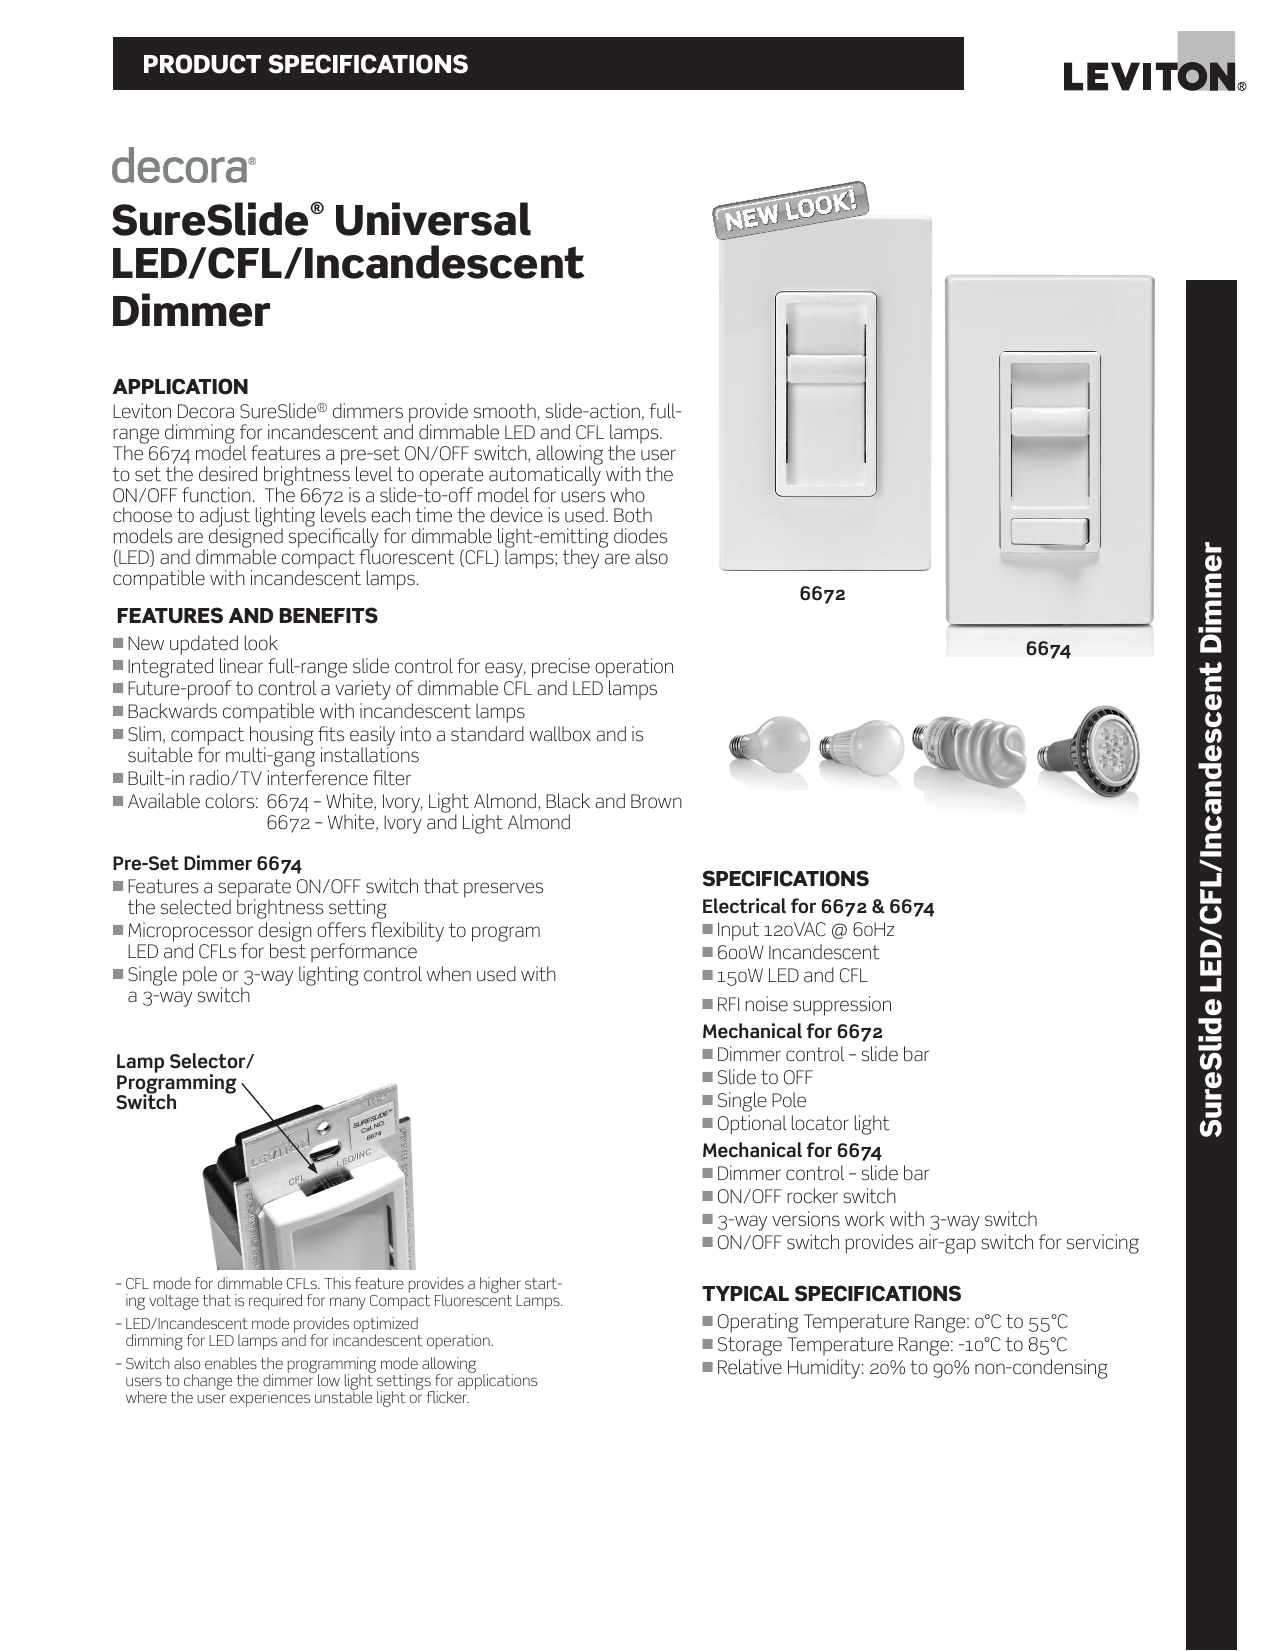 leviton 6672 1lt dimmer spec sheet manualzz trailer light hookup diagram